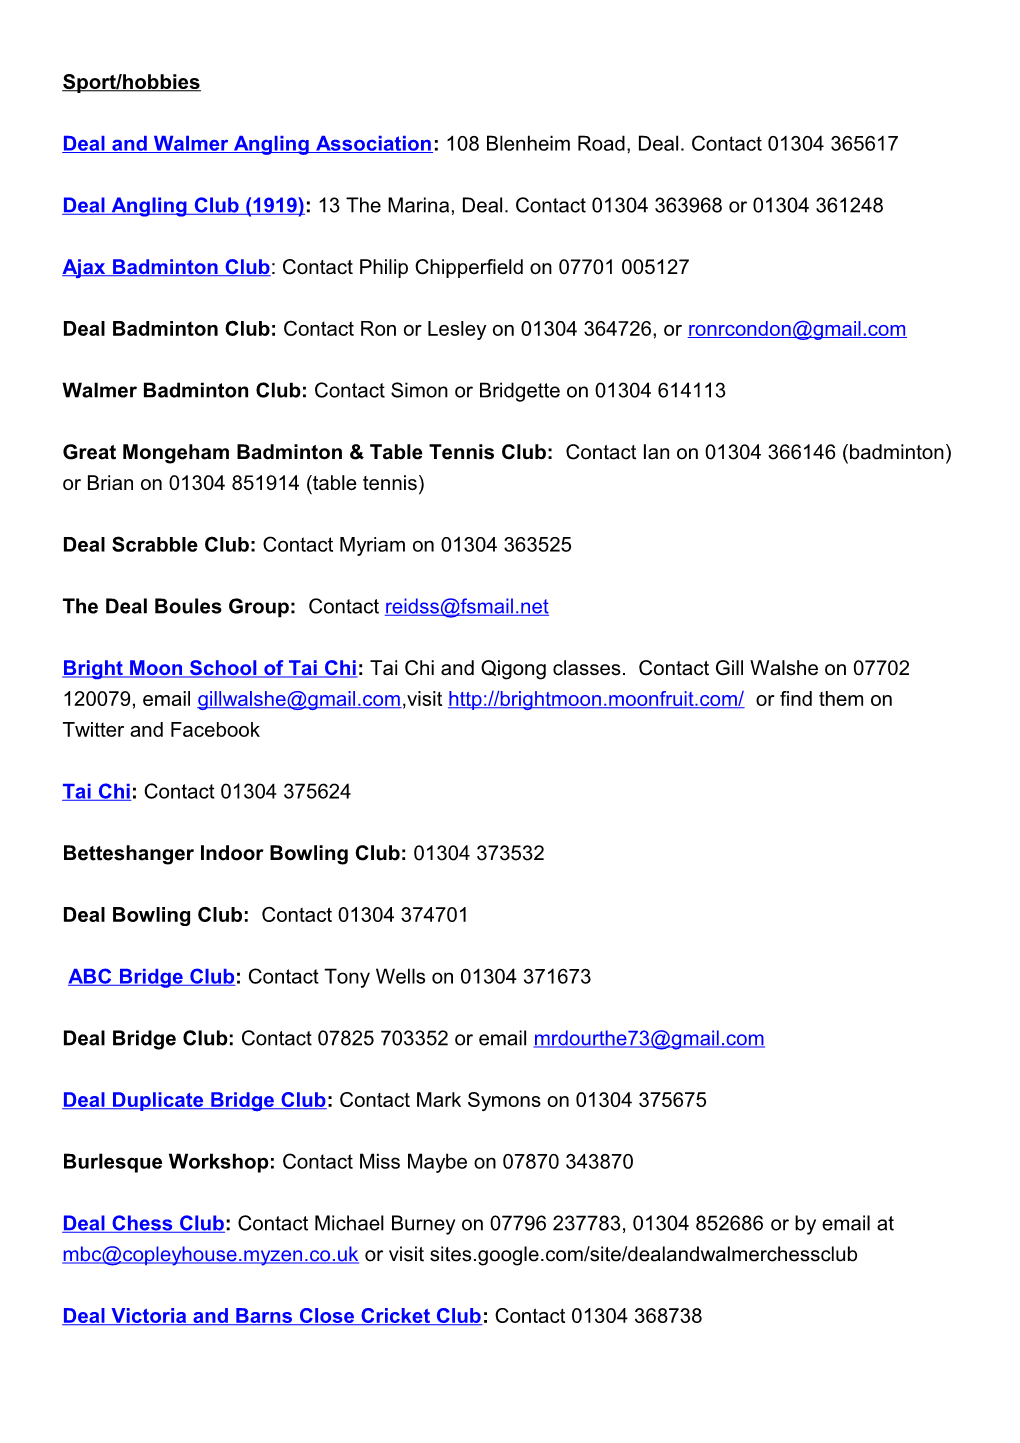 Deal and Walmer Angling Association : 108 Blenheim Road, Deal. Contact 01304 365617